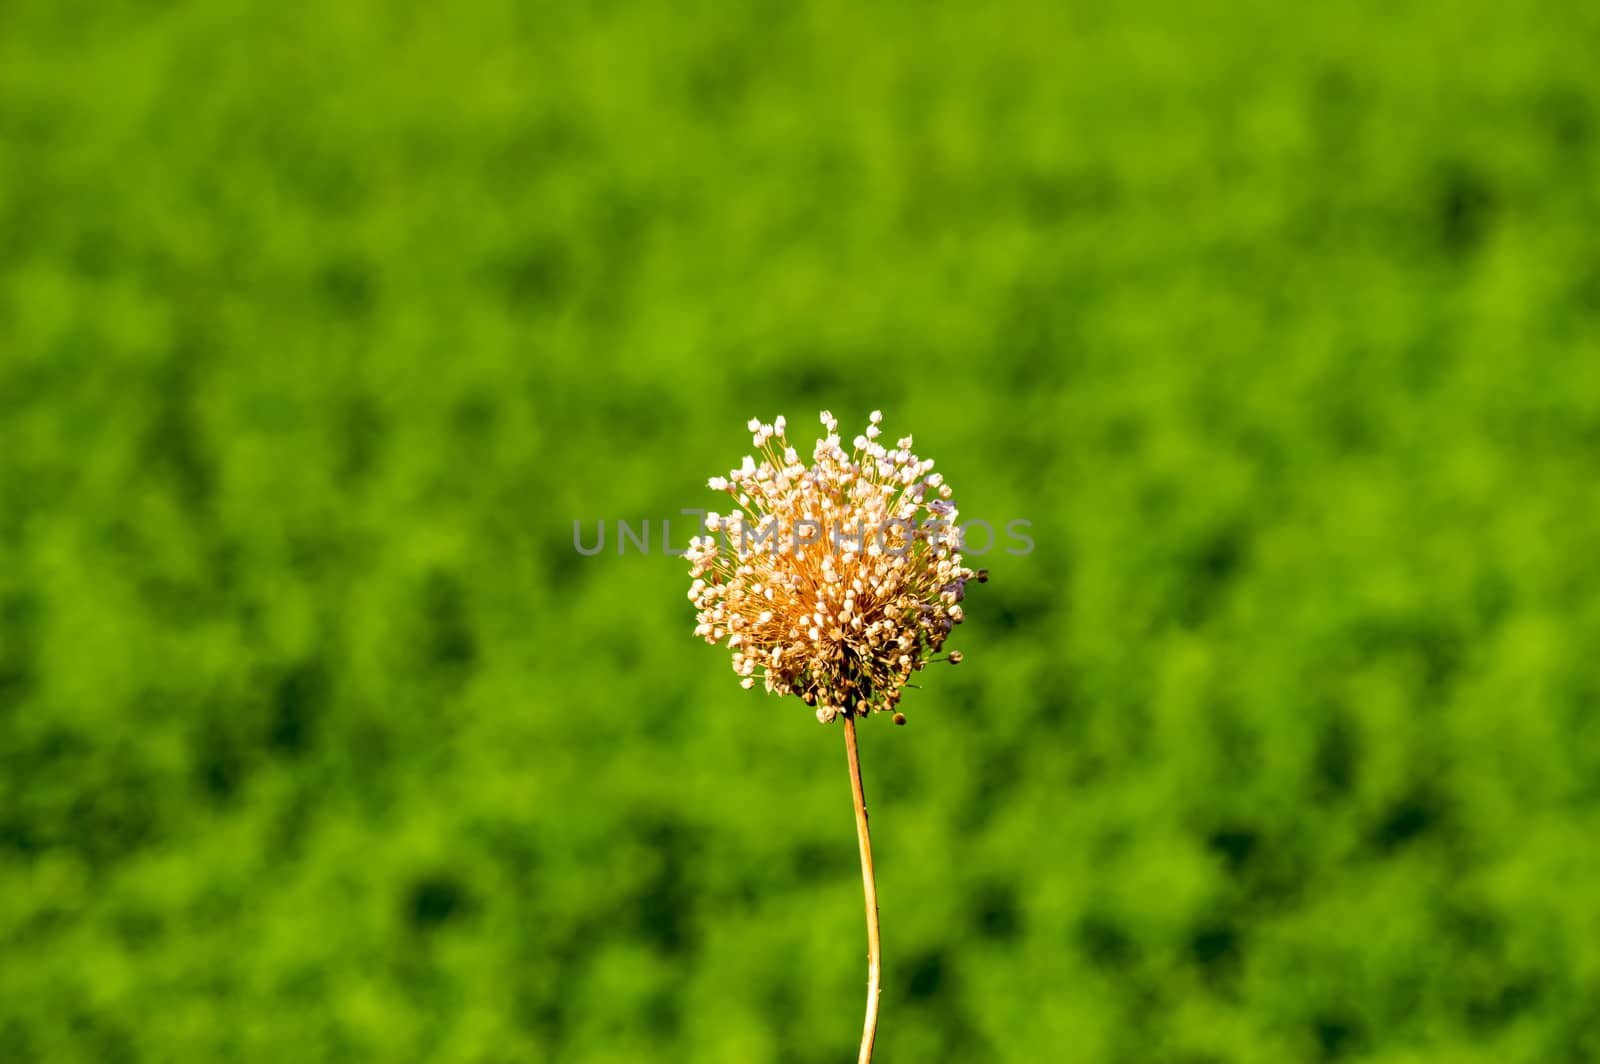 Leek flower (Allium ampeloprasum) close up  by Philou1000